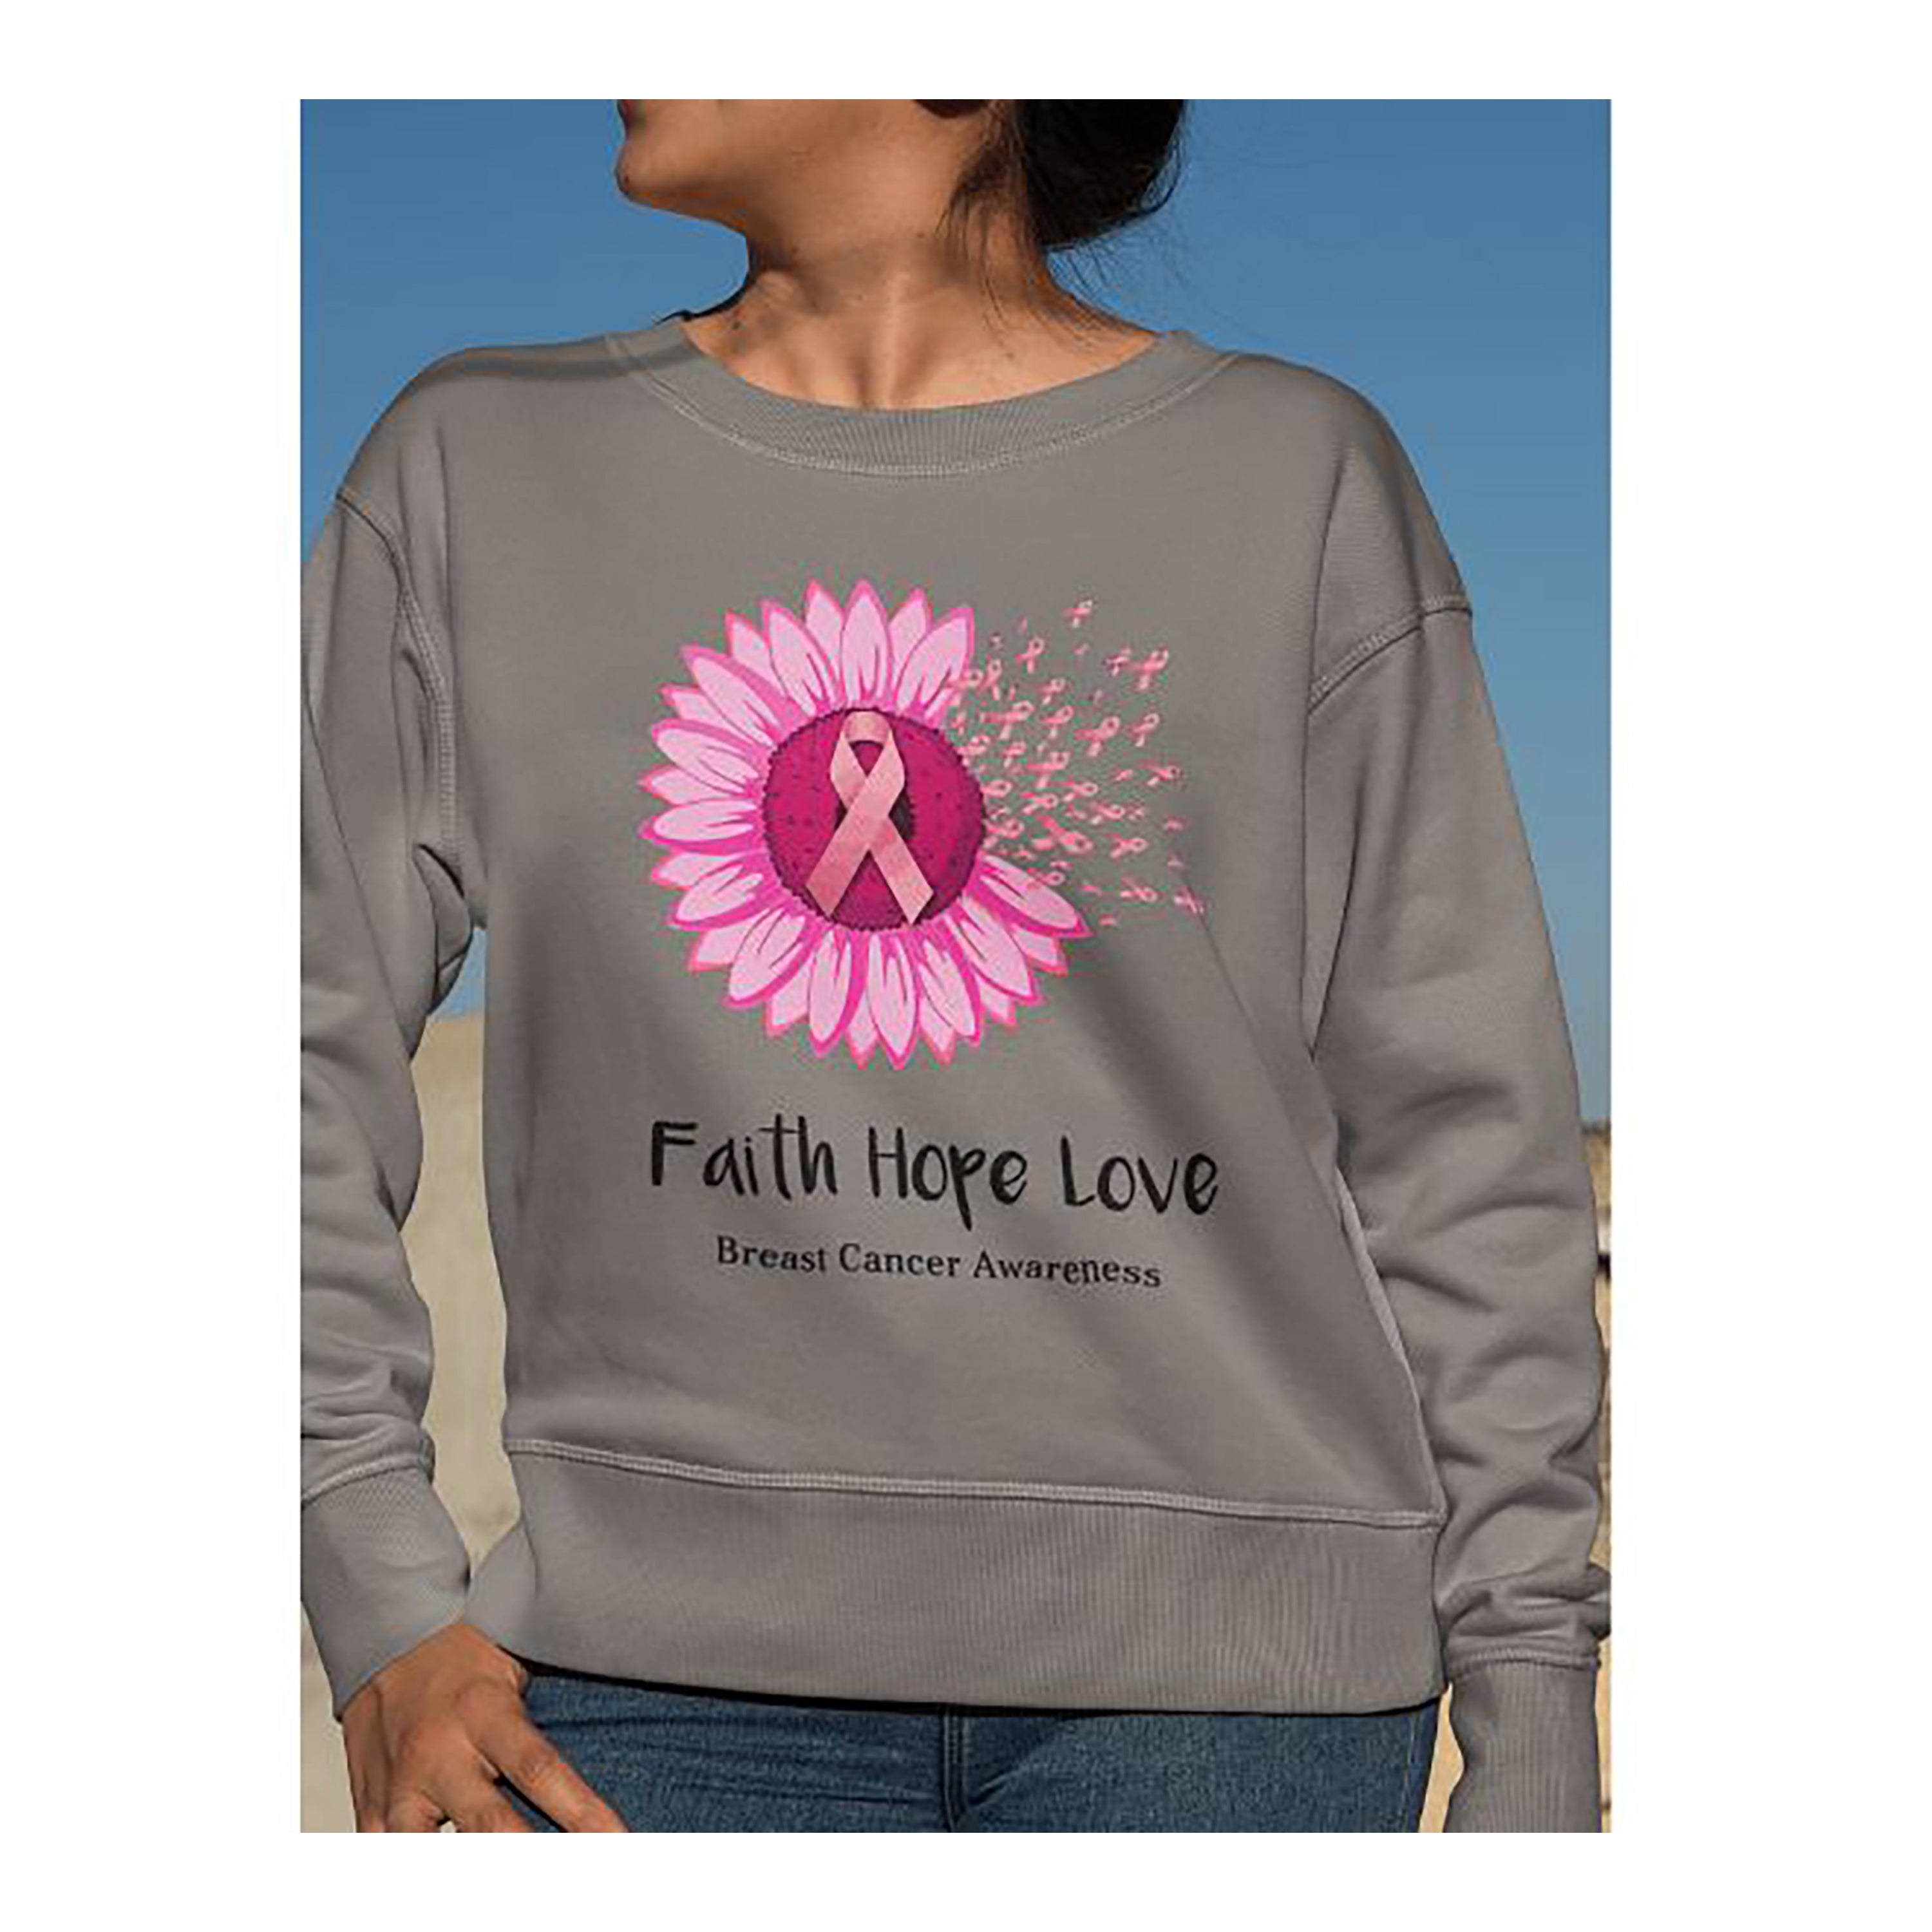 "FAITH HOPE LOVE" Hoodie and Sweatshirt